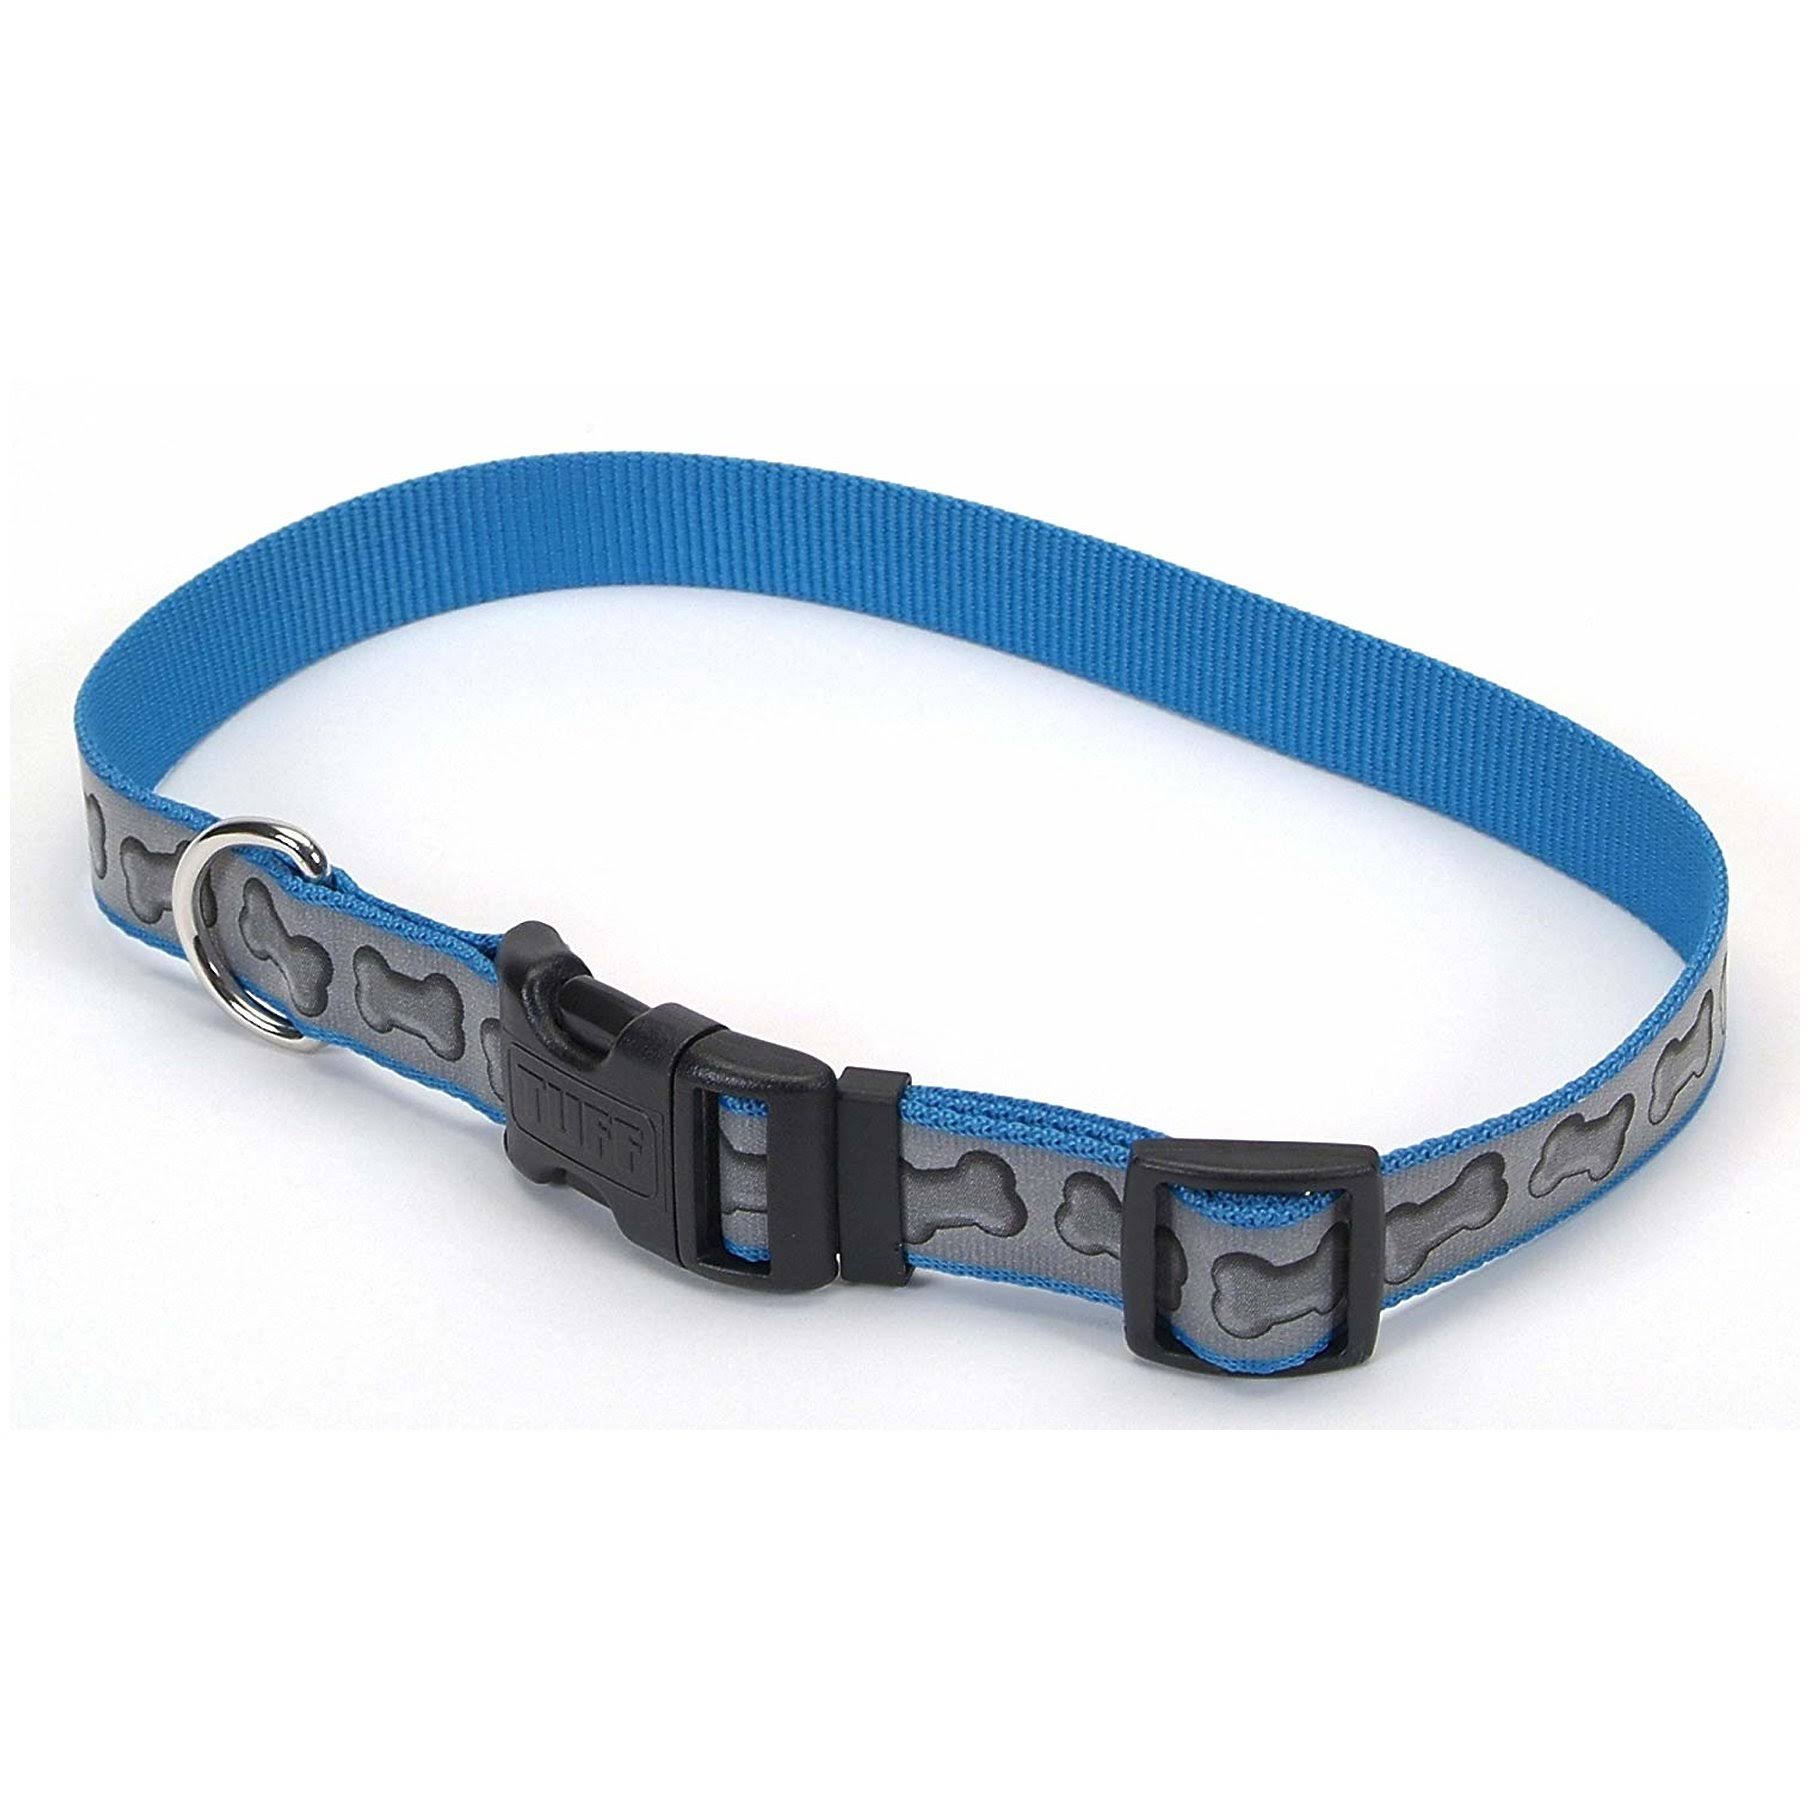 Blue Lazer Brite Reflective Dog Collar - 3/8" x 8-12", Blue